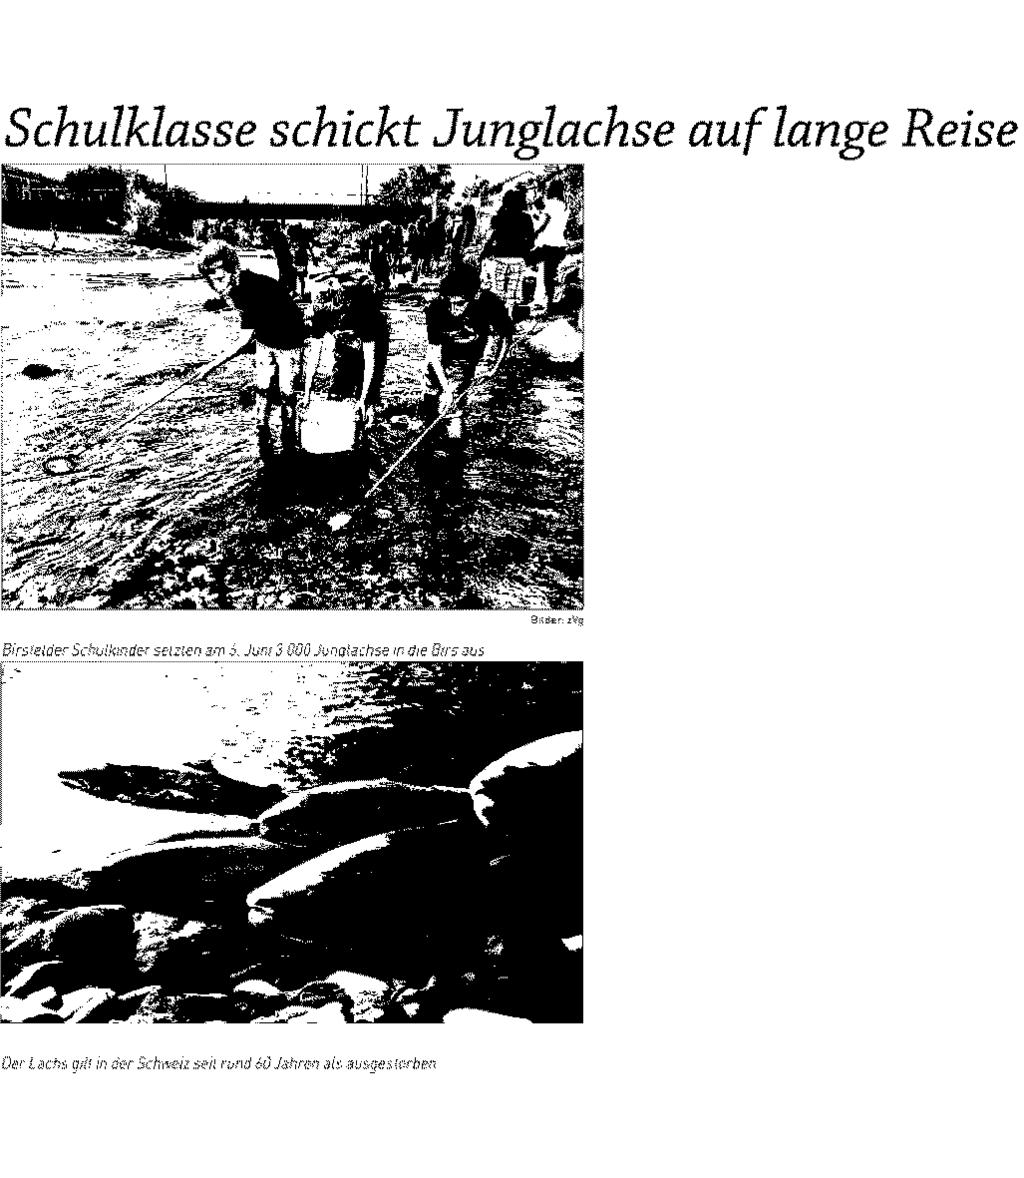 Datum: 20.06.2014 Bericht Seite: 3/26 Baselland Zeitung 4612 Wangen b. Olten 061 902 00 15 www.basellandzeitung.